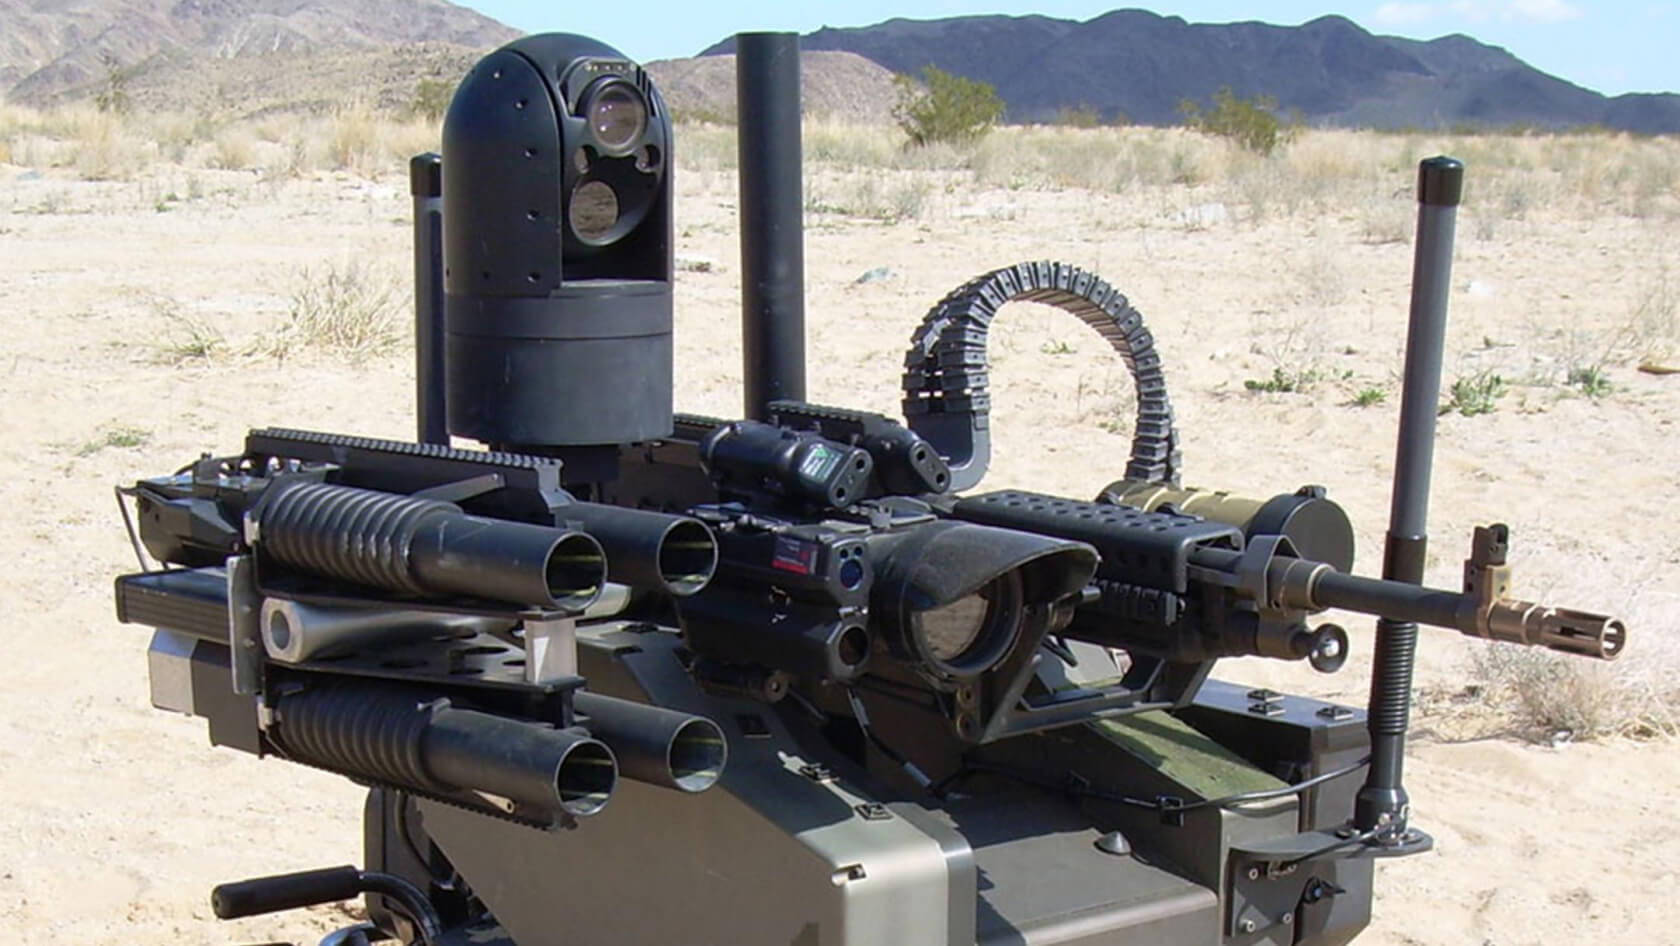 US Army addresses controversial killer robot program